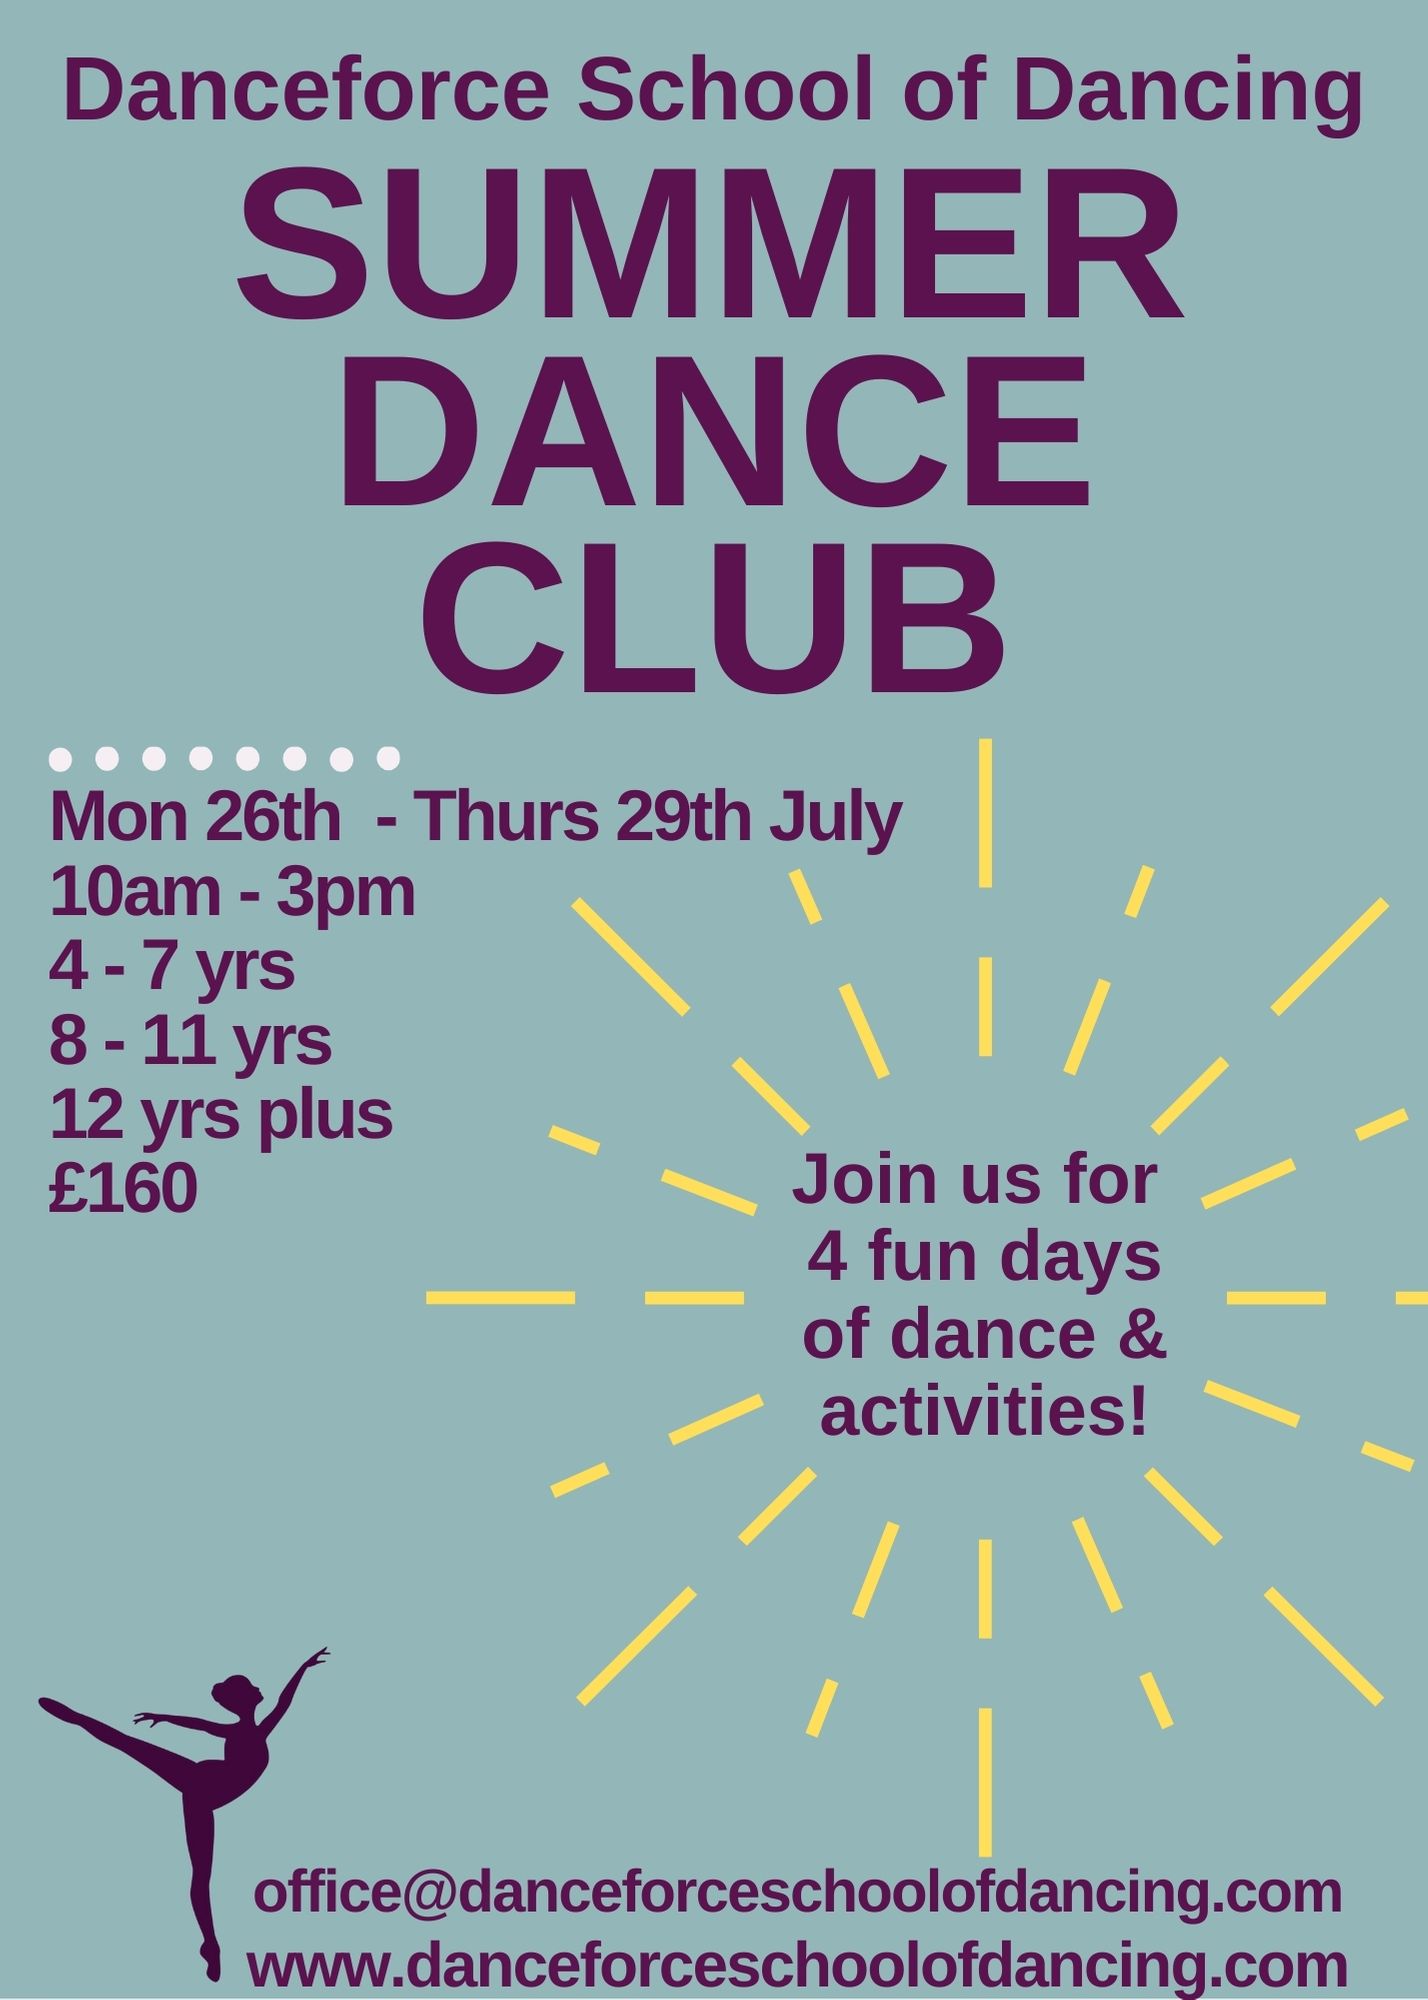 Danceforce Summer Dance Club!